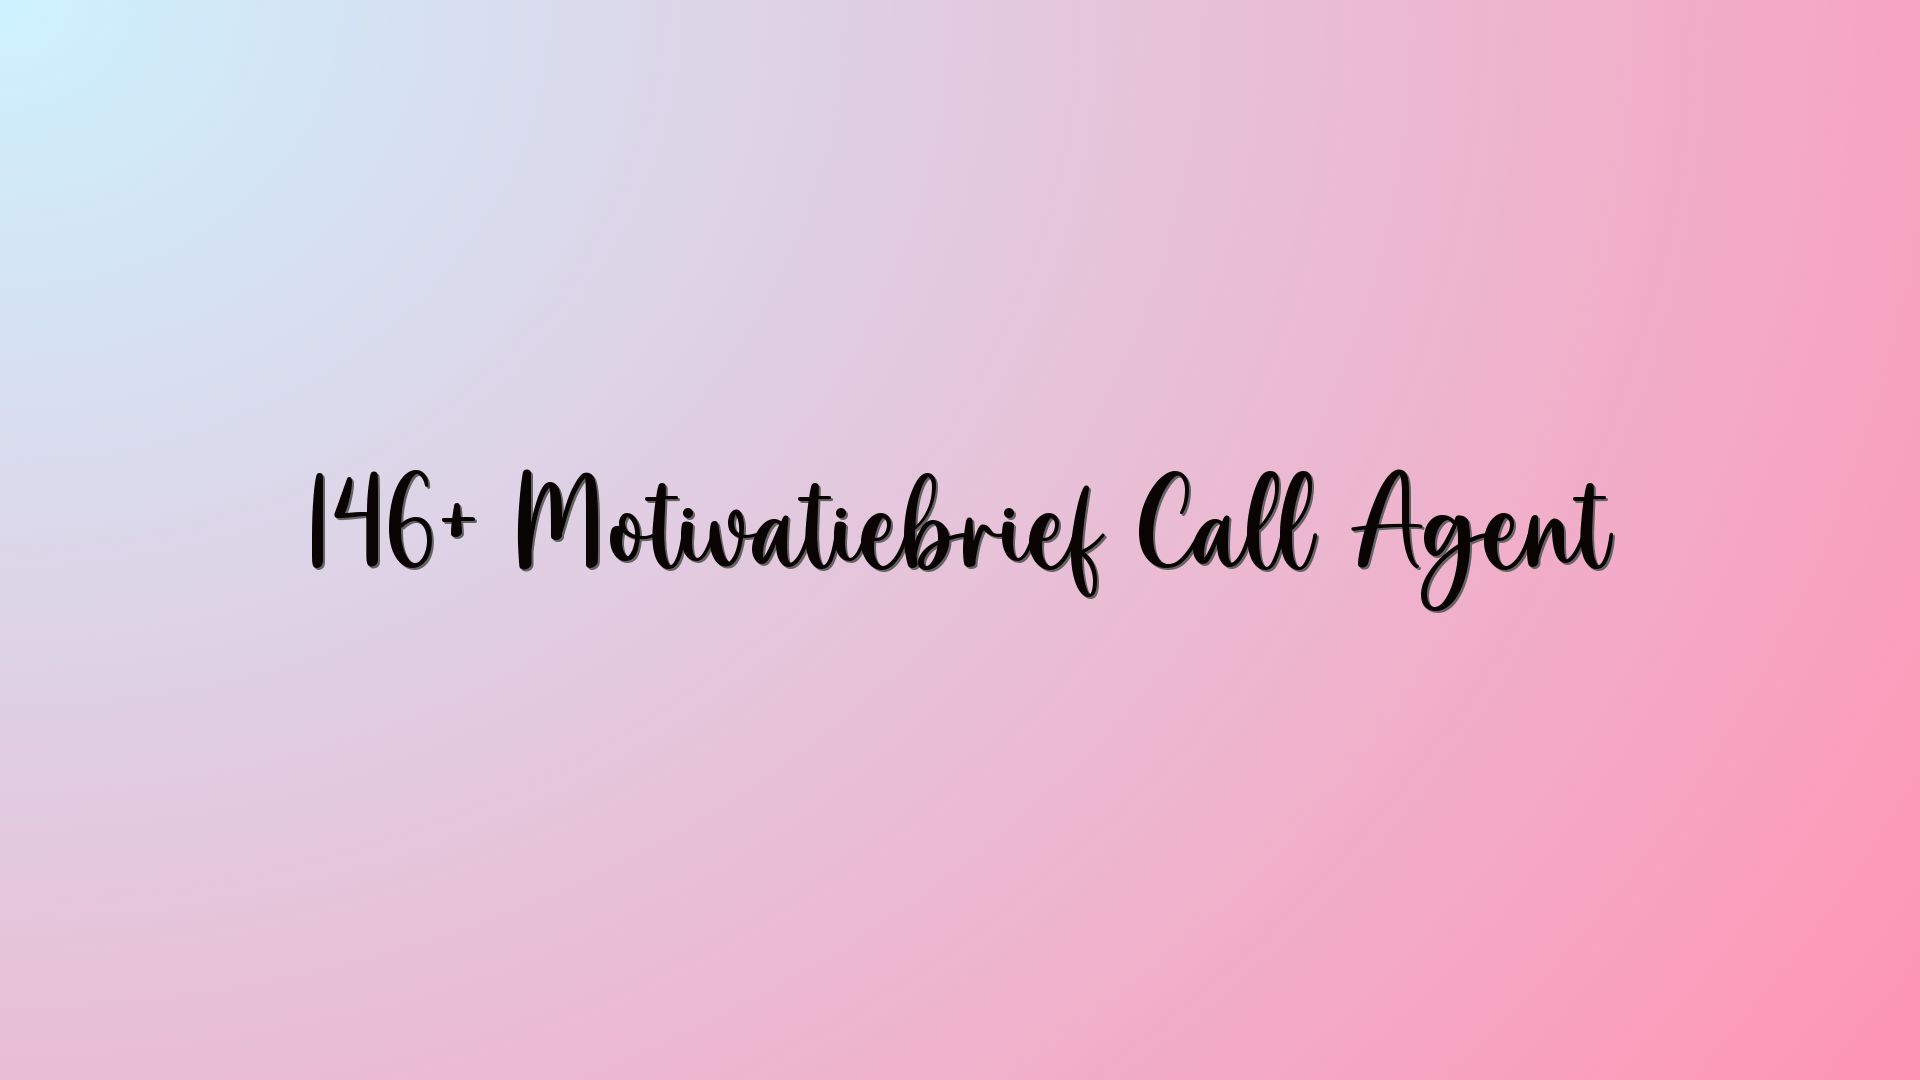 146+ Motivatiebrief Call Agent